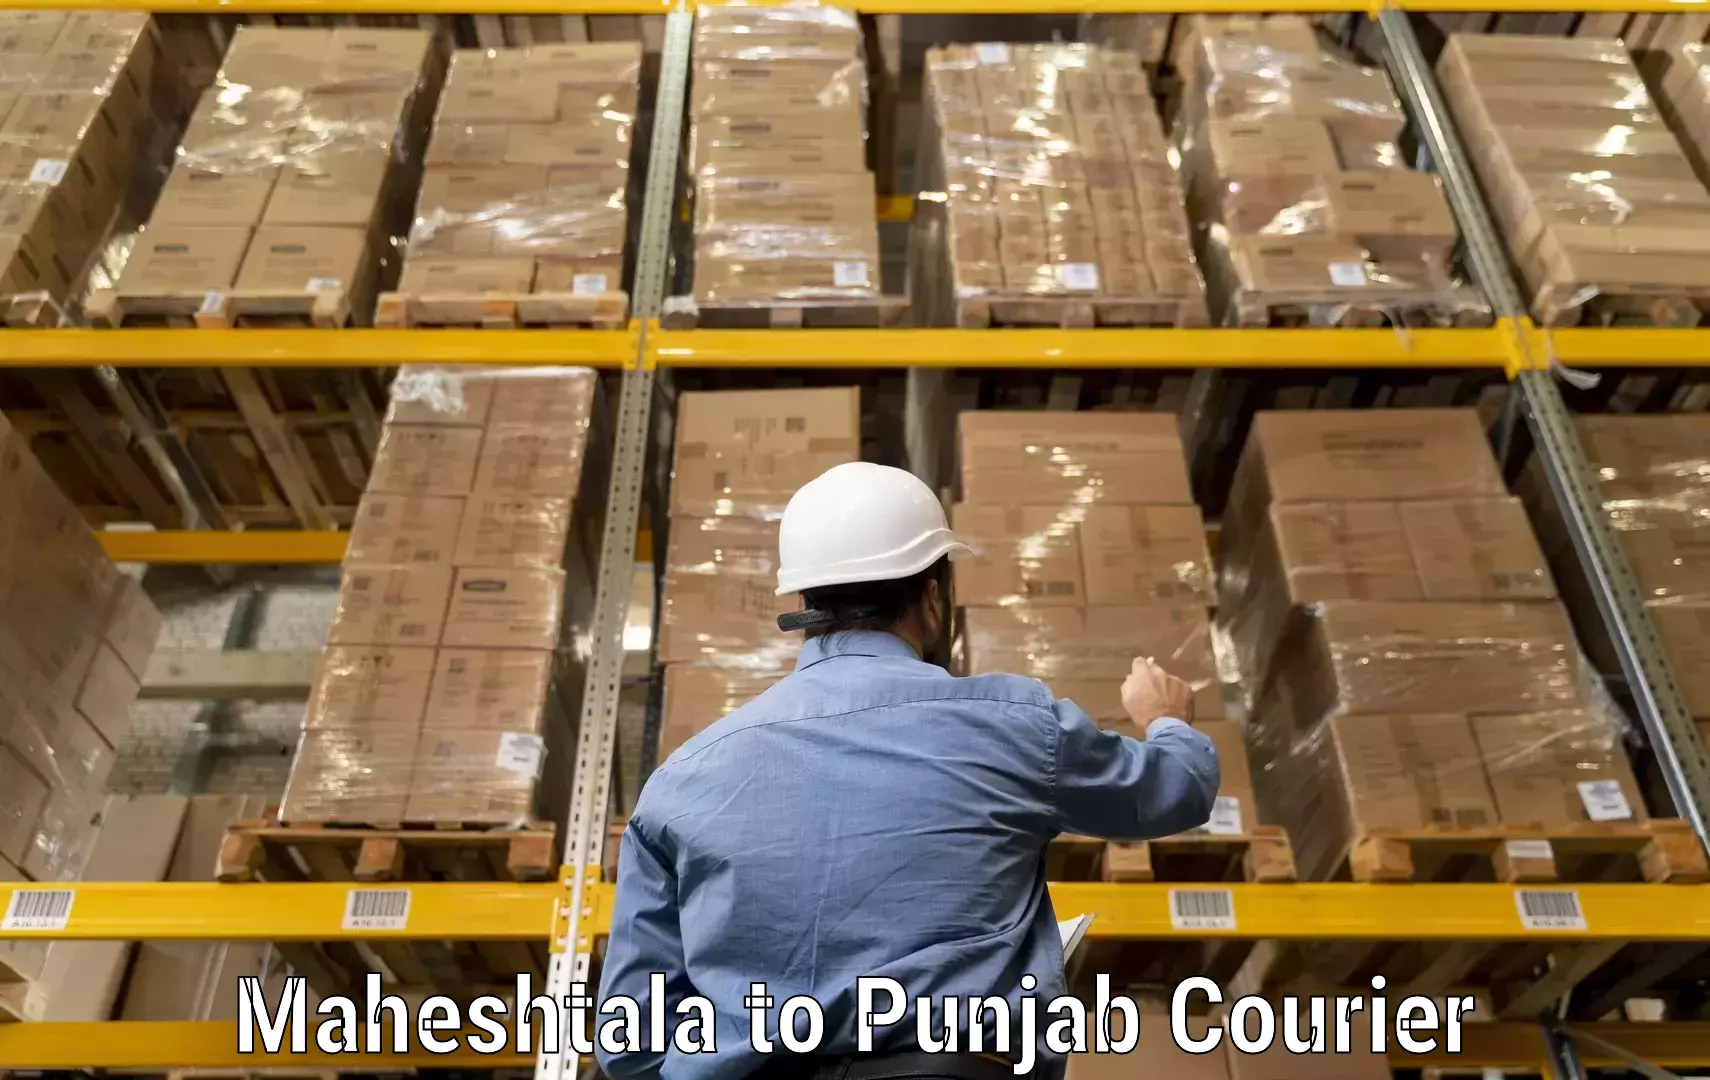 Courier app Maheshtala to Jalandhar